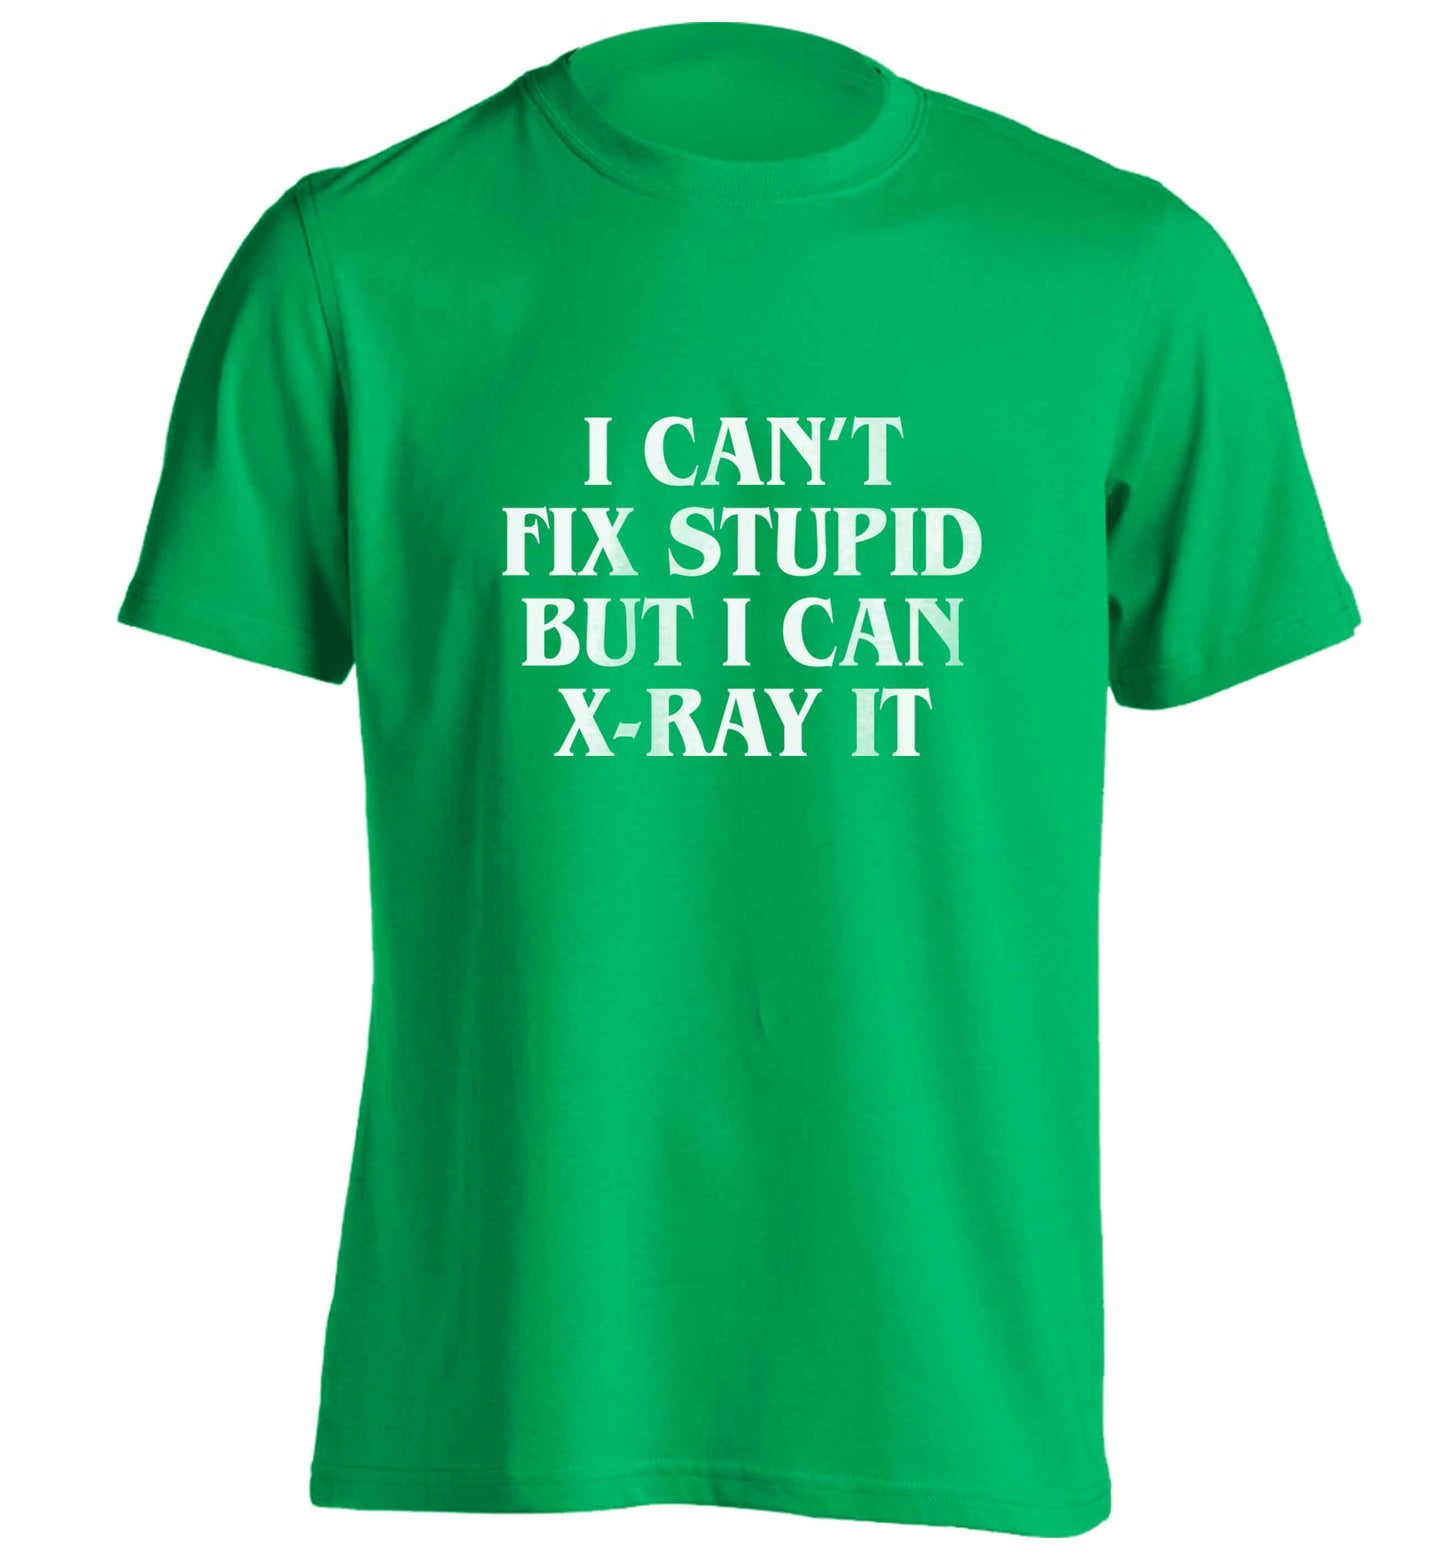 I can't fix stupid but I can X-Ray it adults unisex green Tshirt 2XL